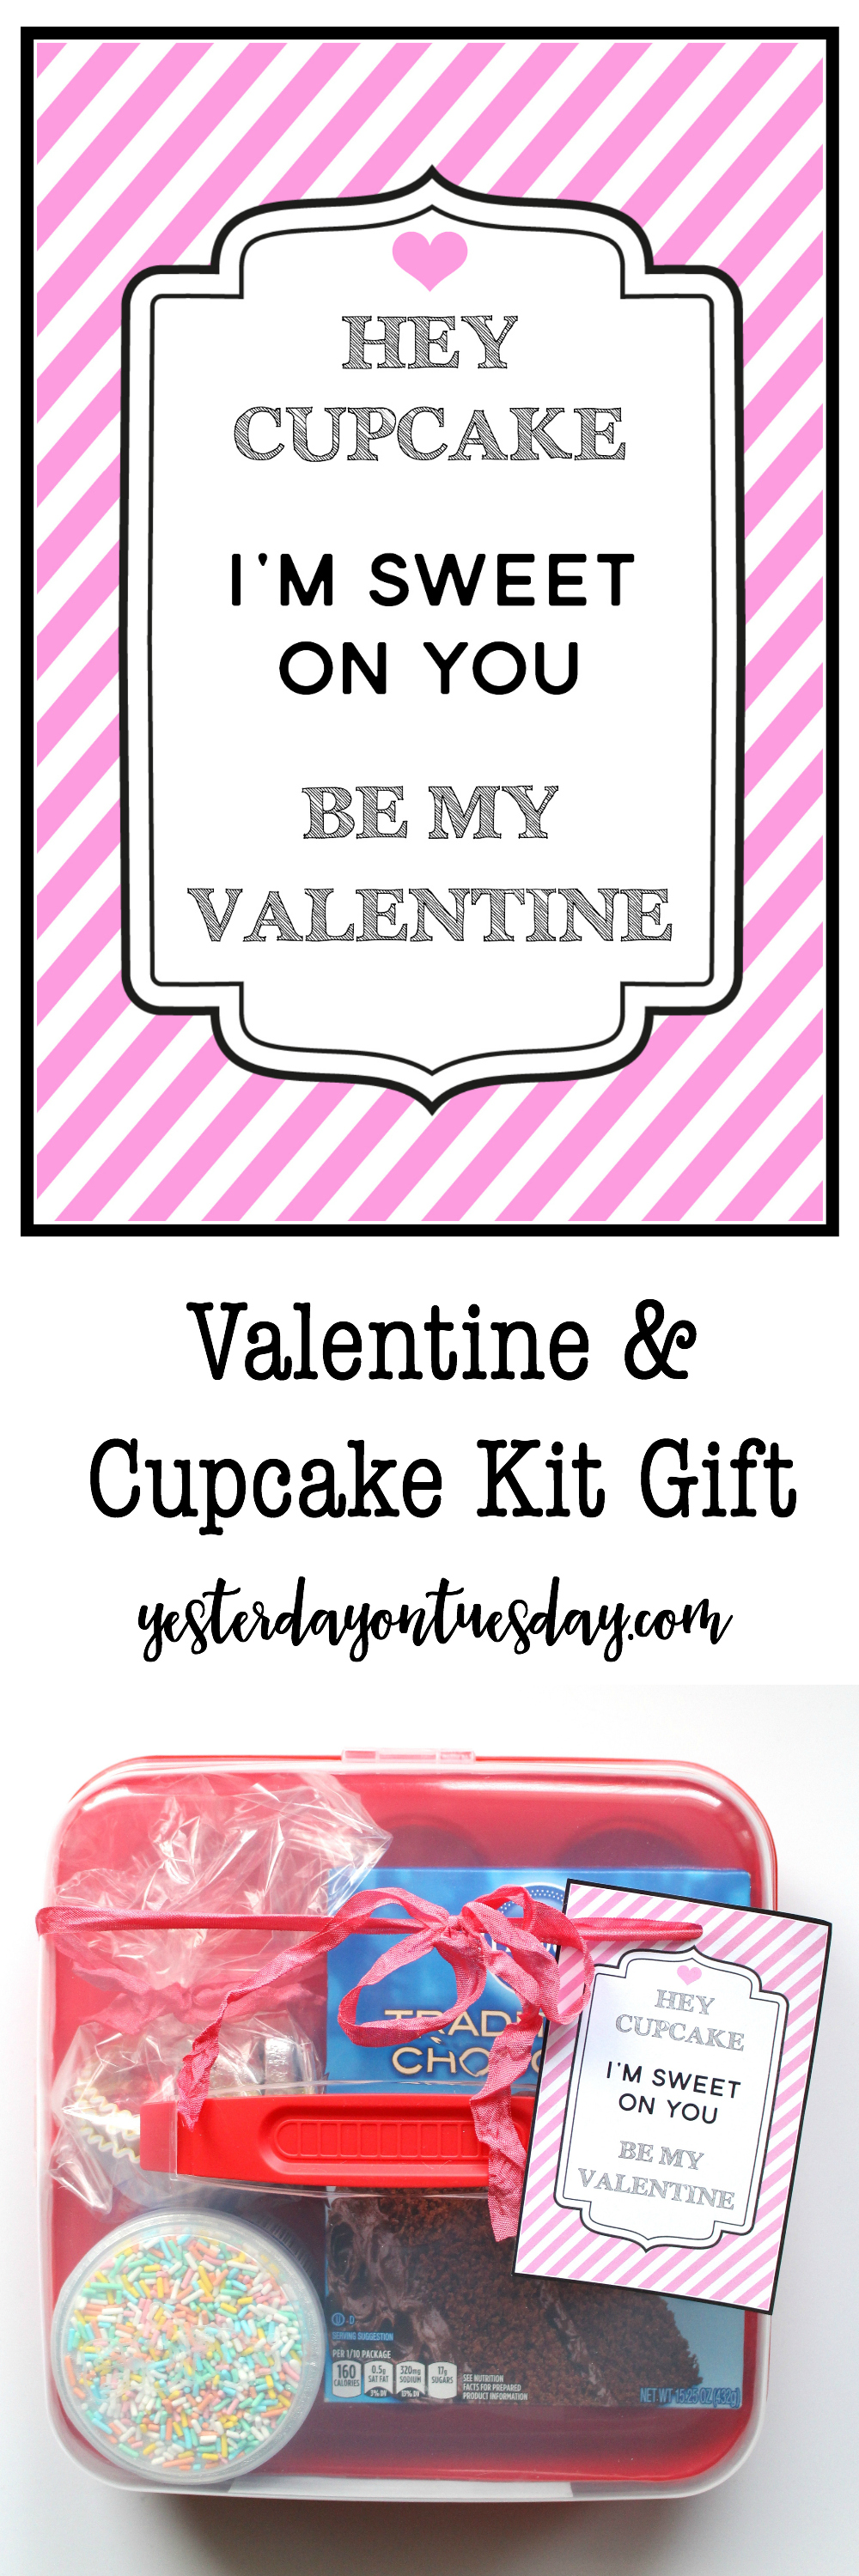 Cupcake Valentine and Gift